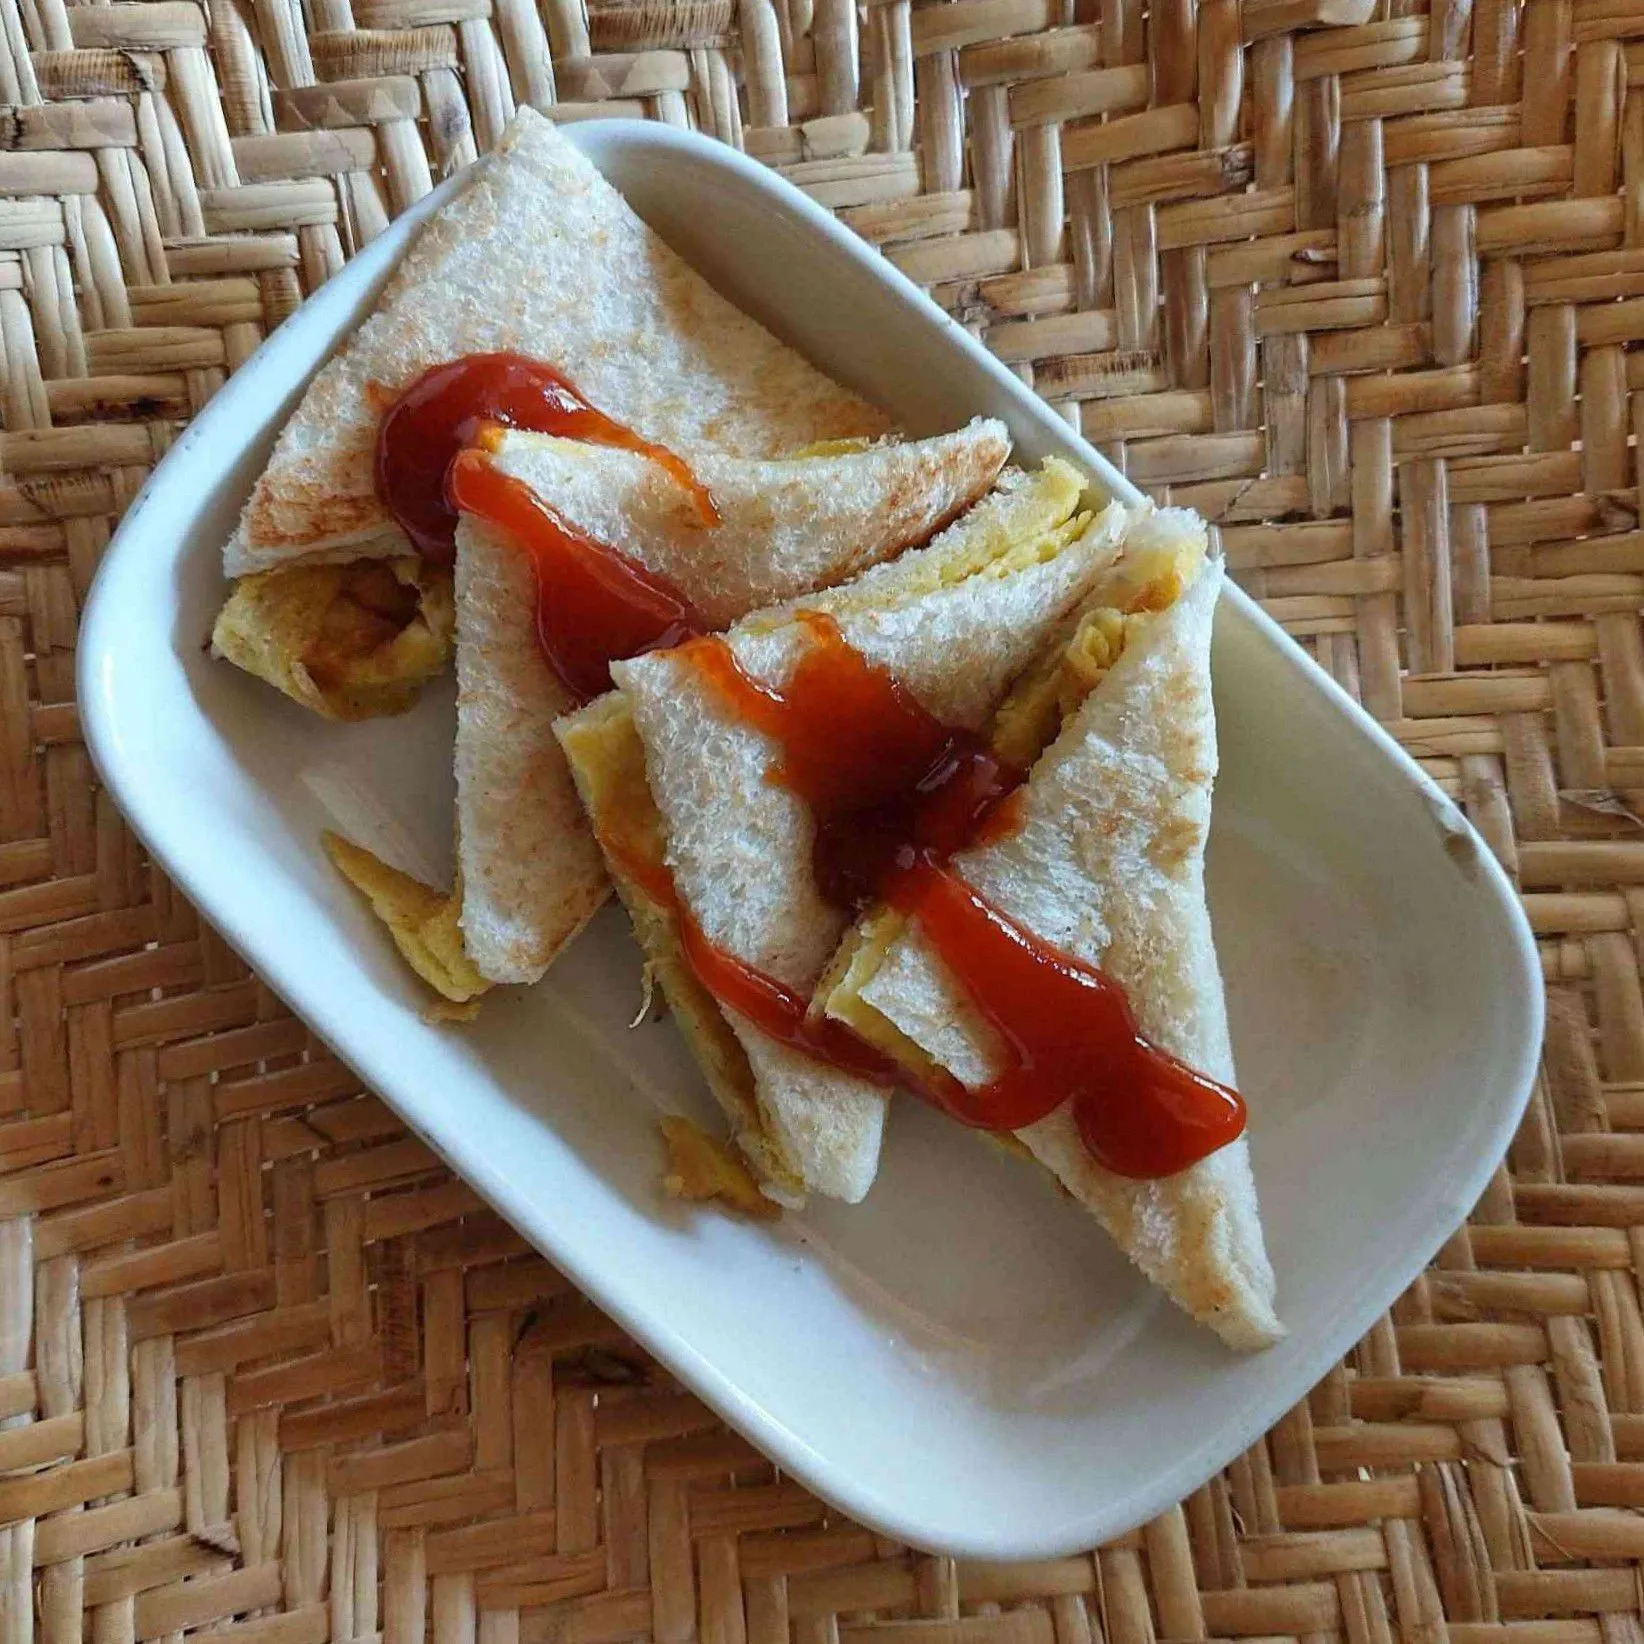 Bread Omelette ala India #JagoMasakPeriode4Week7